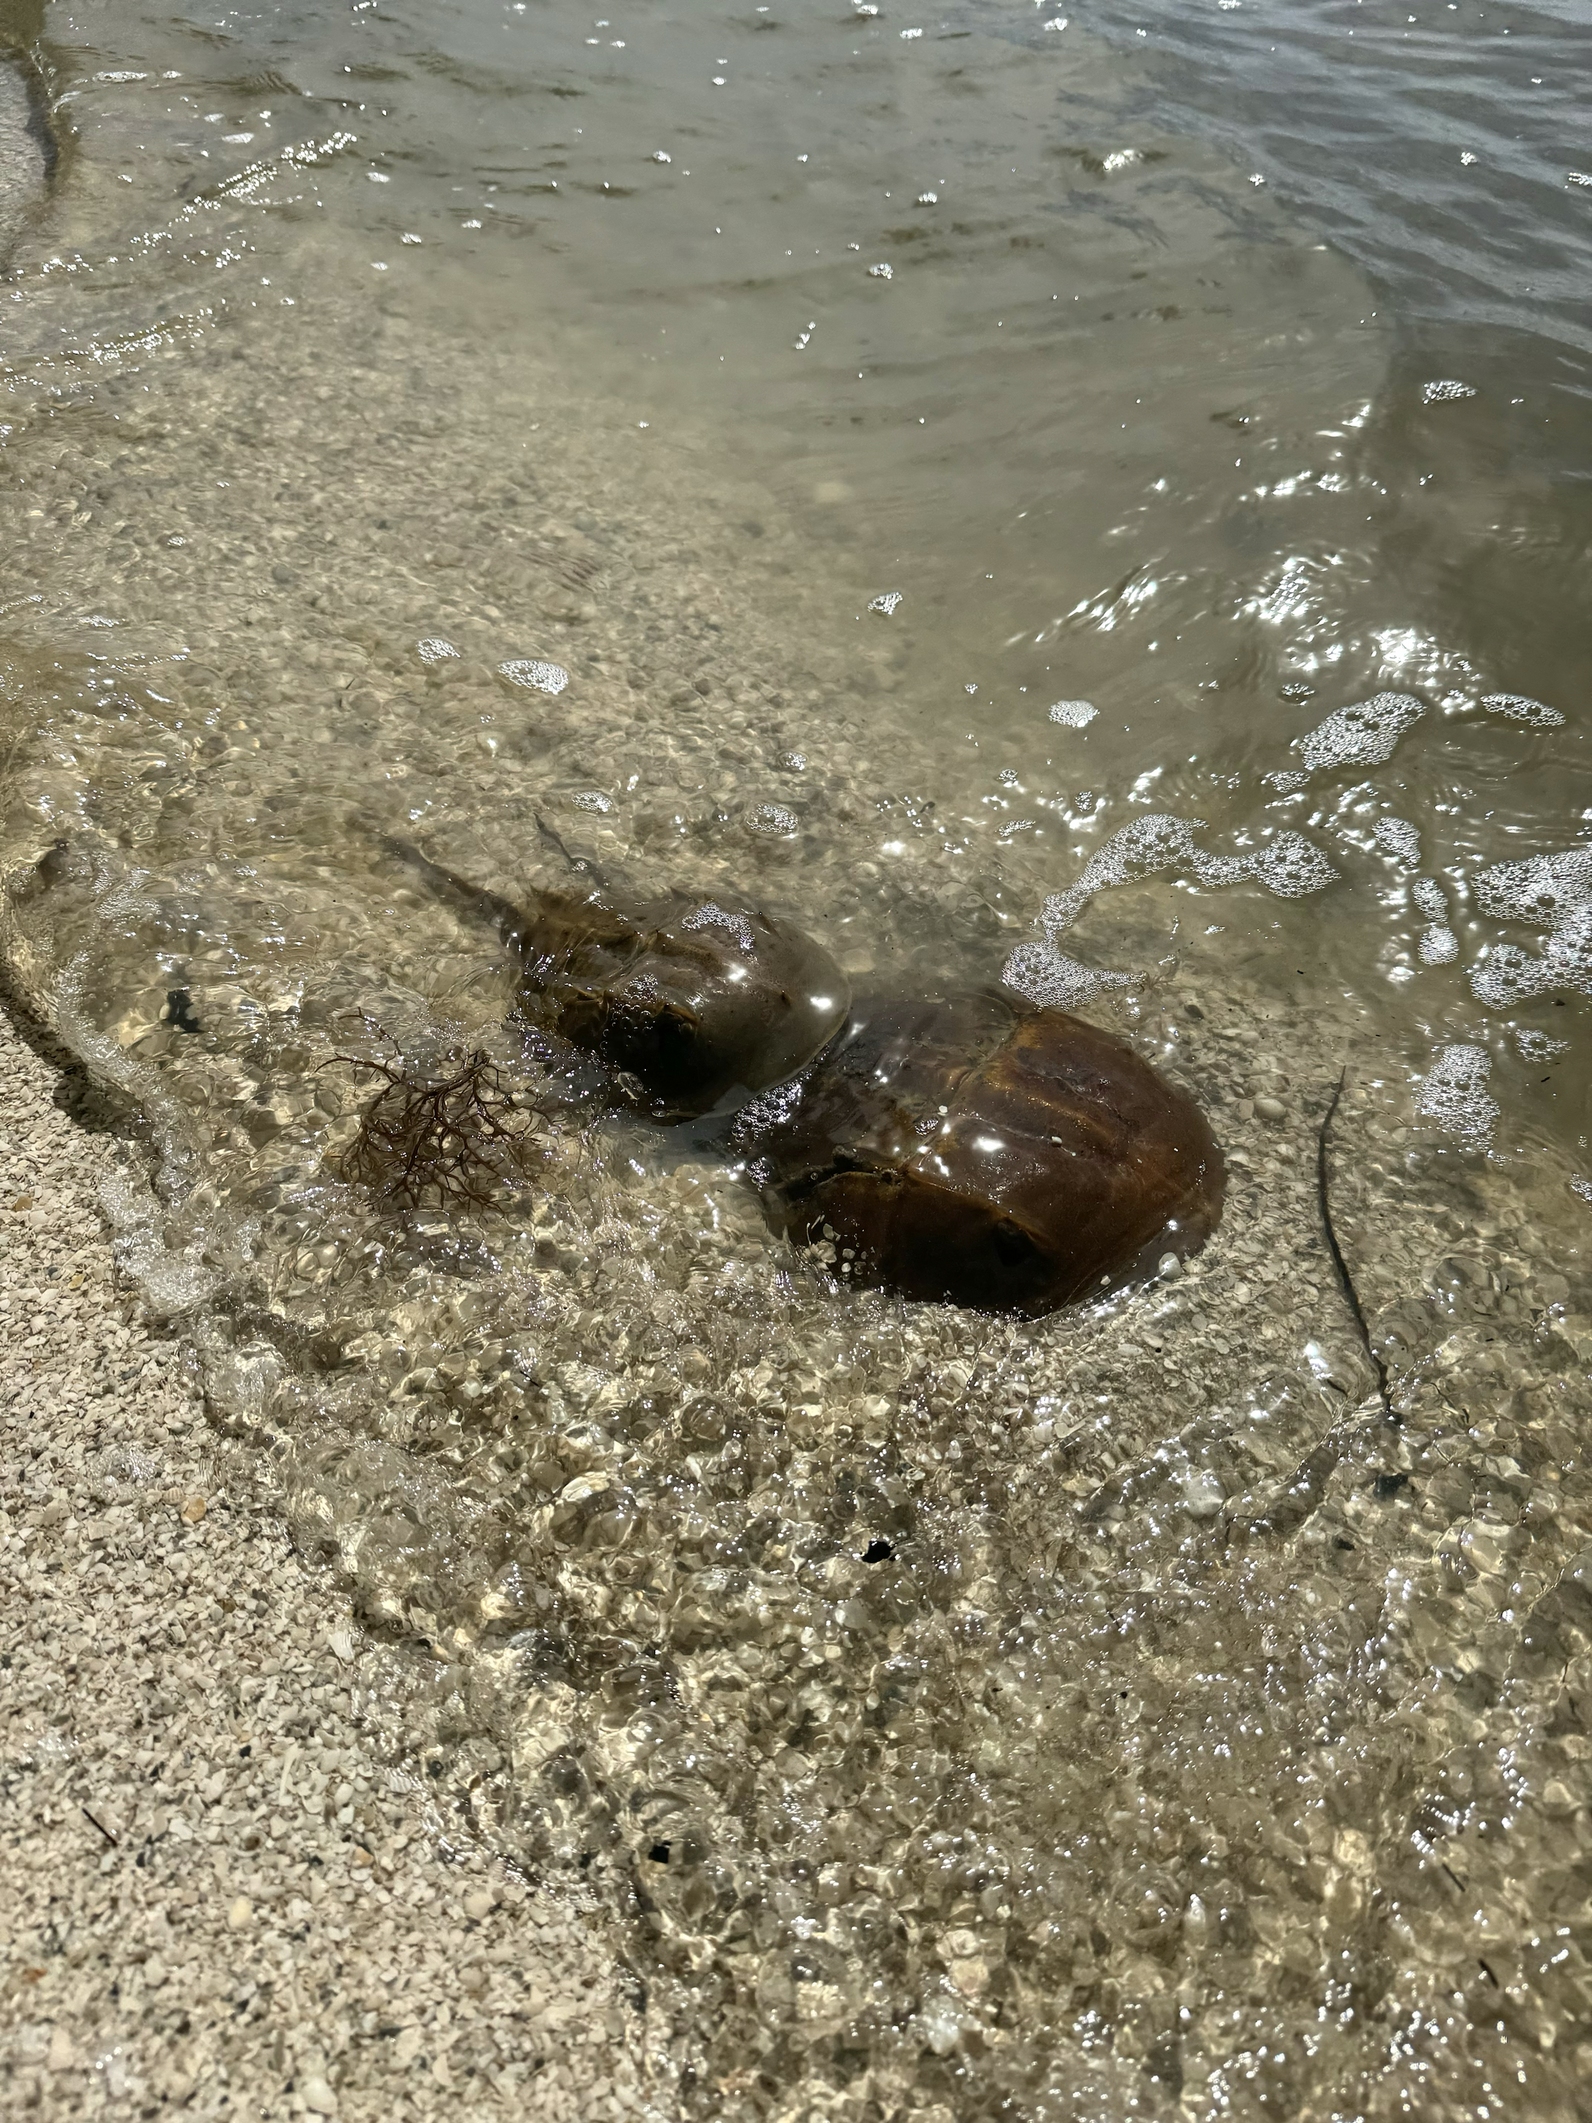 A horseshoe crab just below the shoreline underwater.